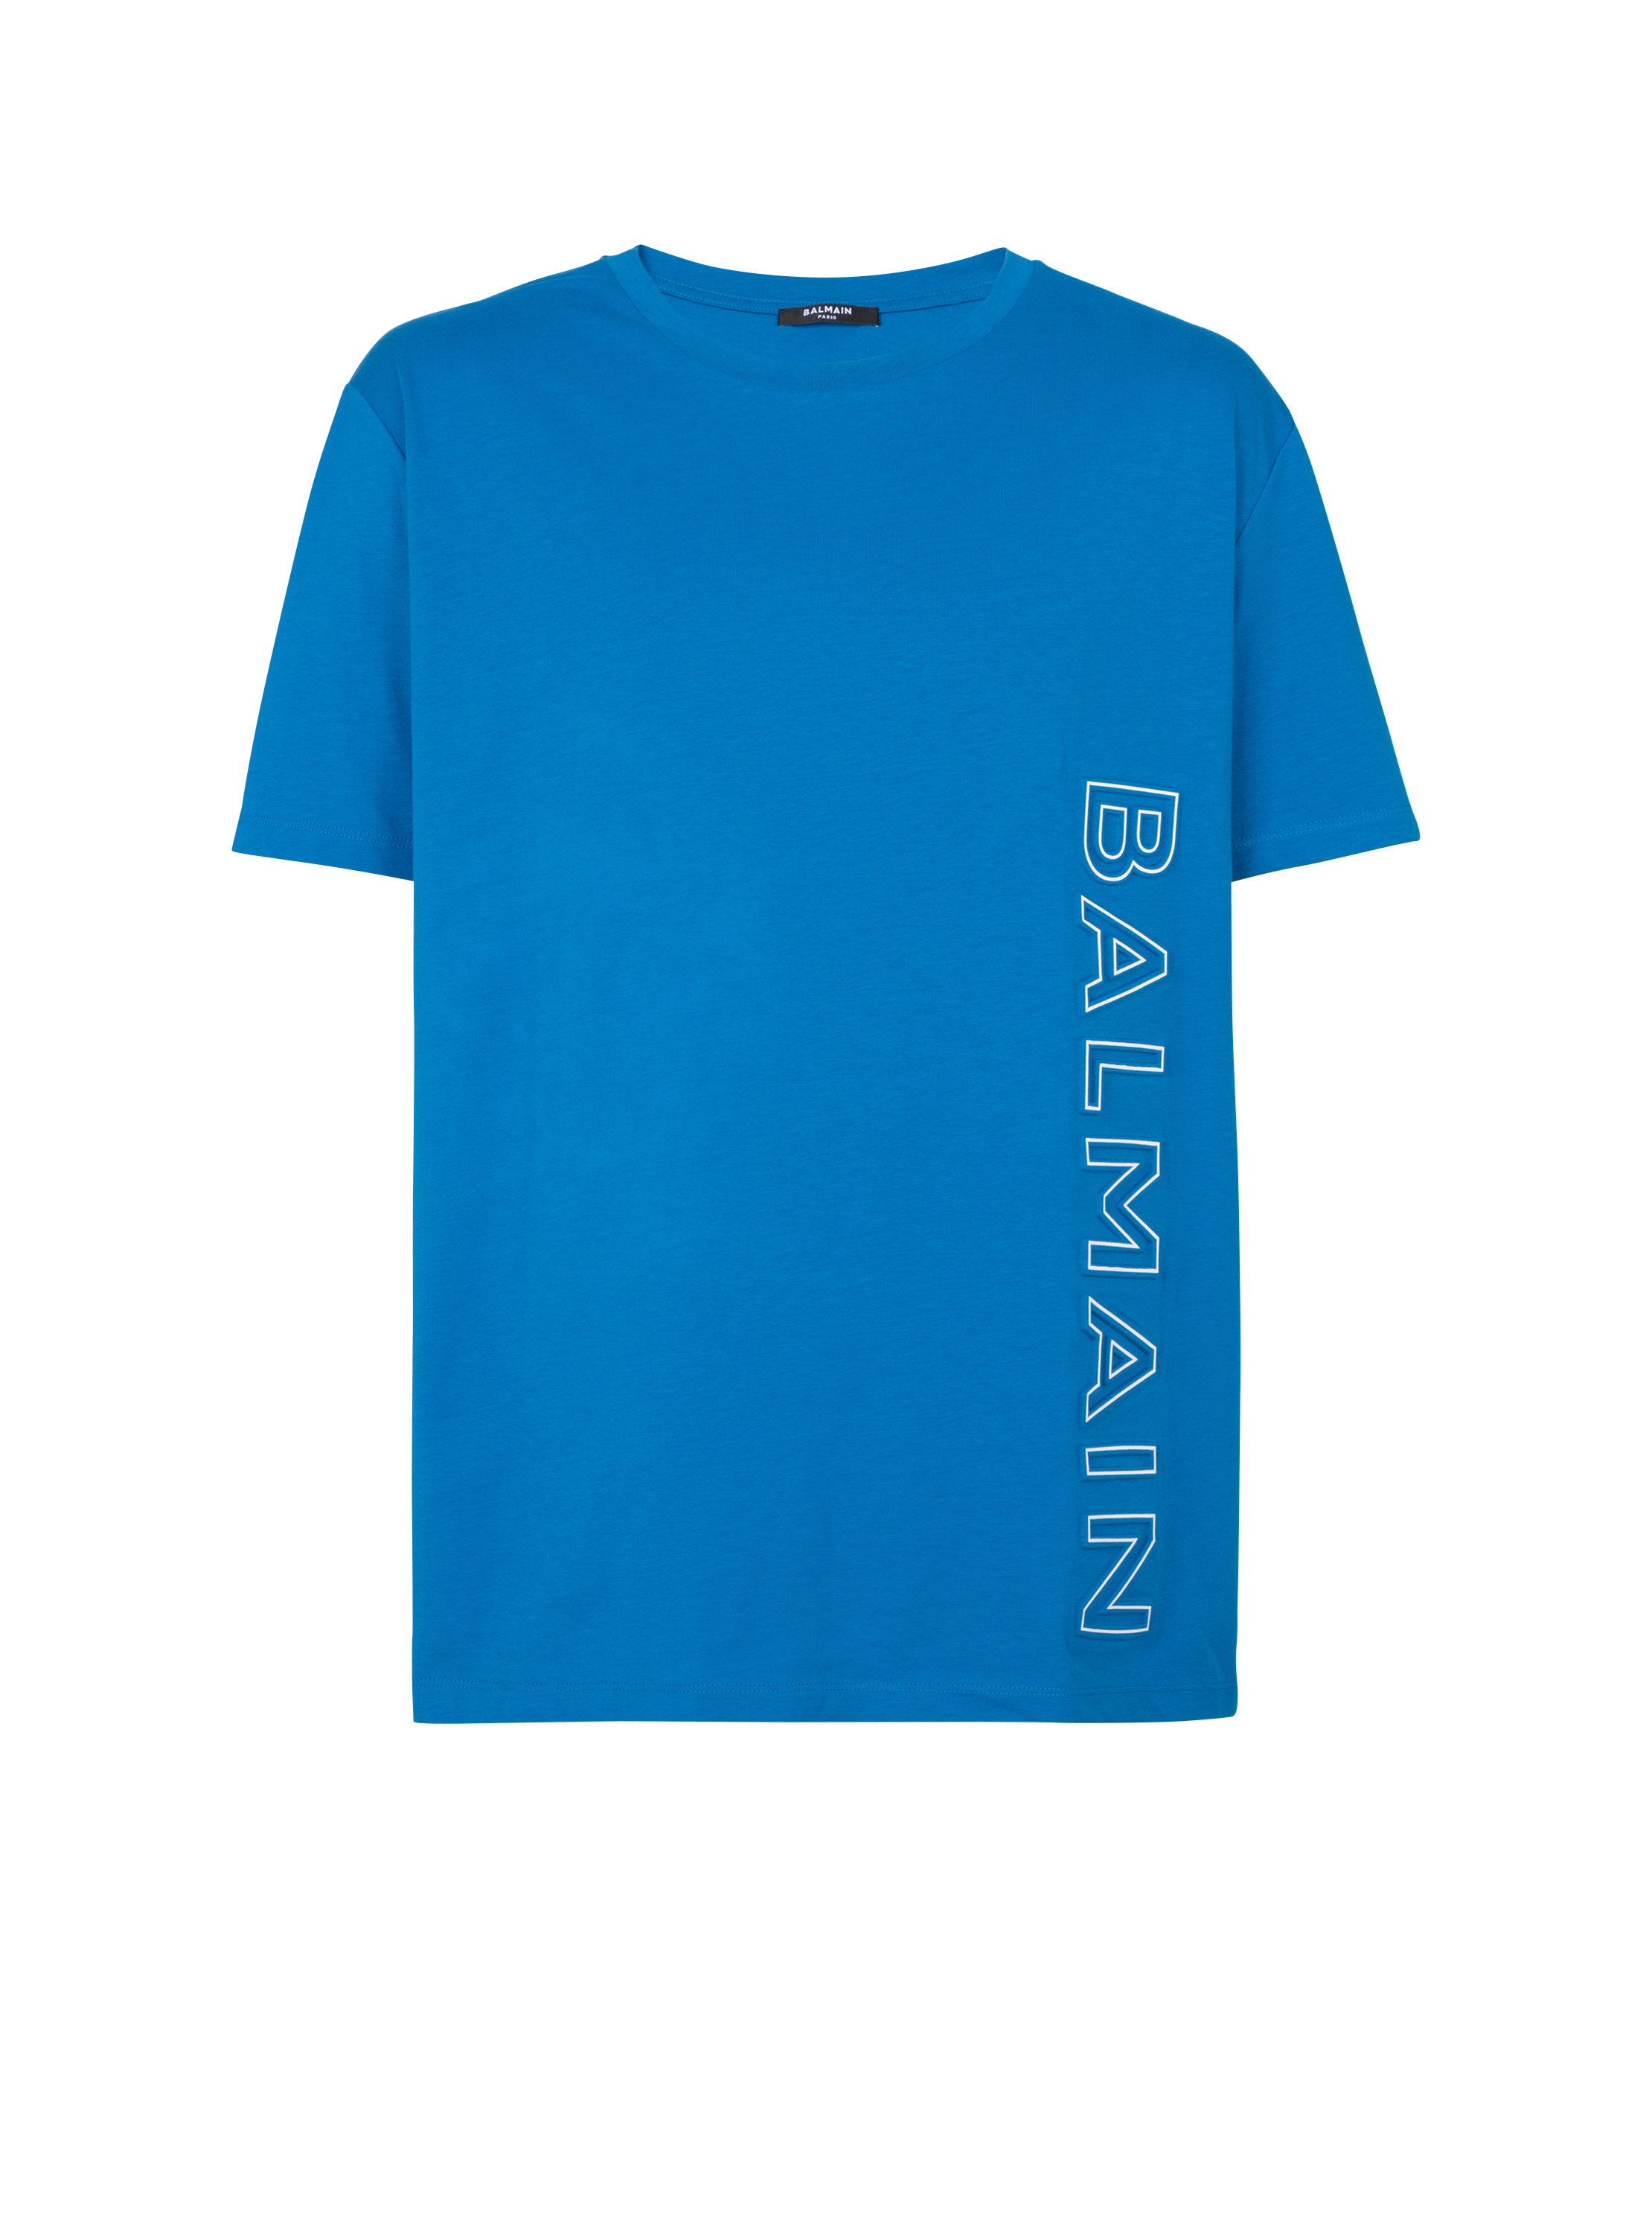 Geprägtes Balmain T-shirt, blau, hi-res